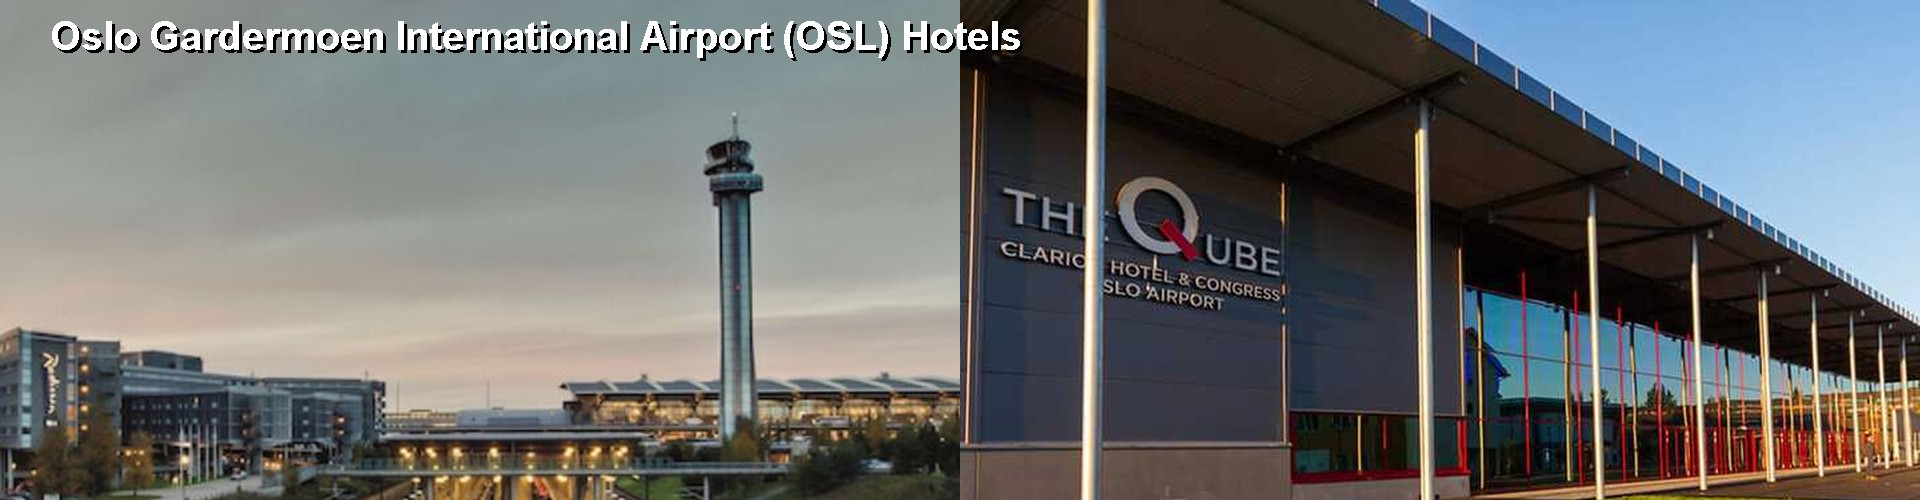 5 Best Hotels near Oslo Gardermoen International Airport (OSL)